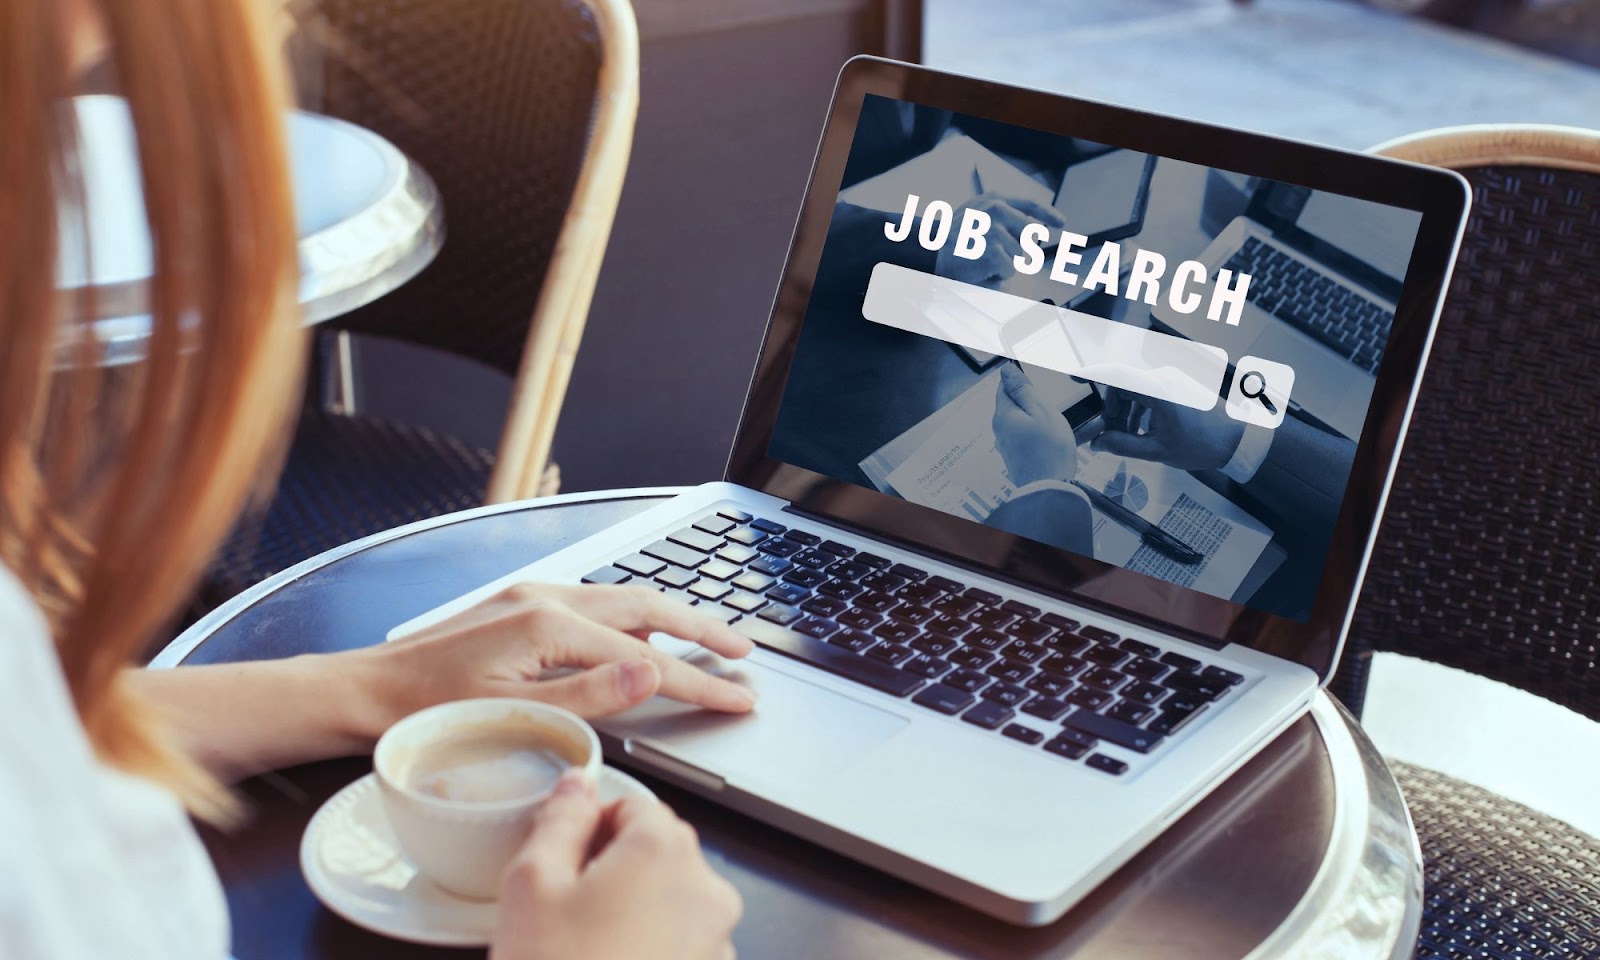 LinkedIn job search tips